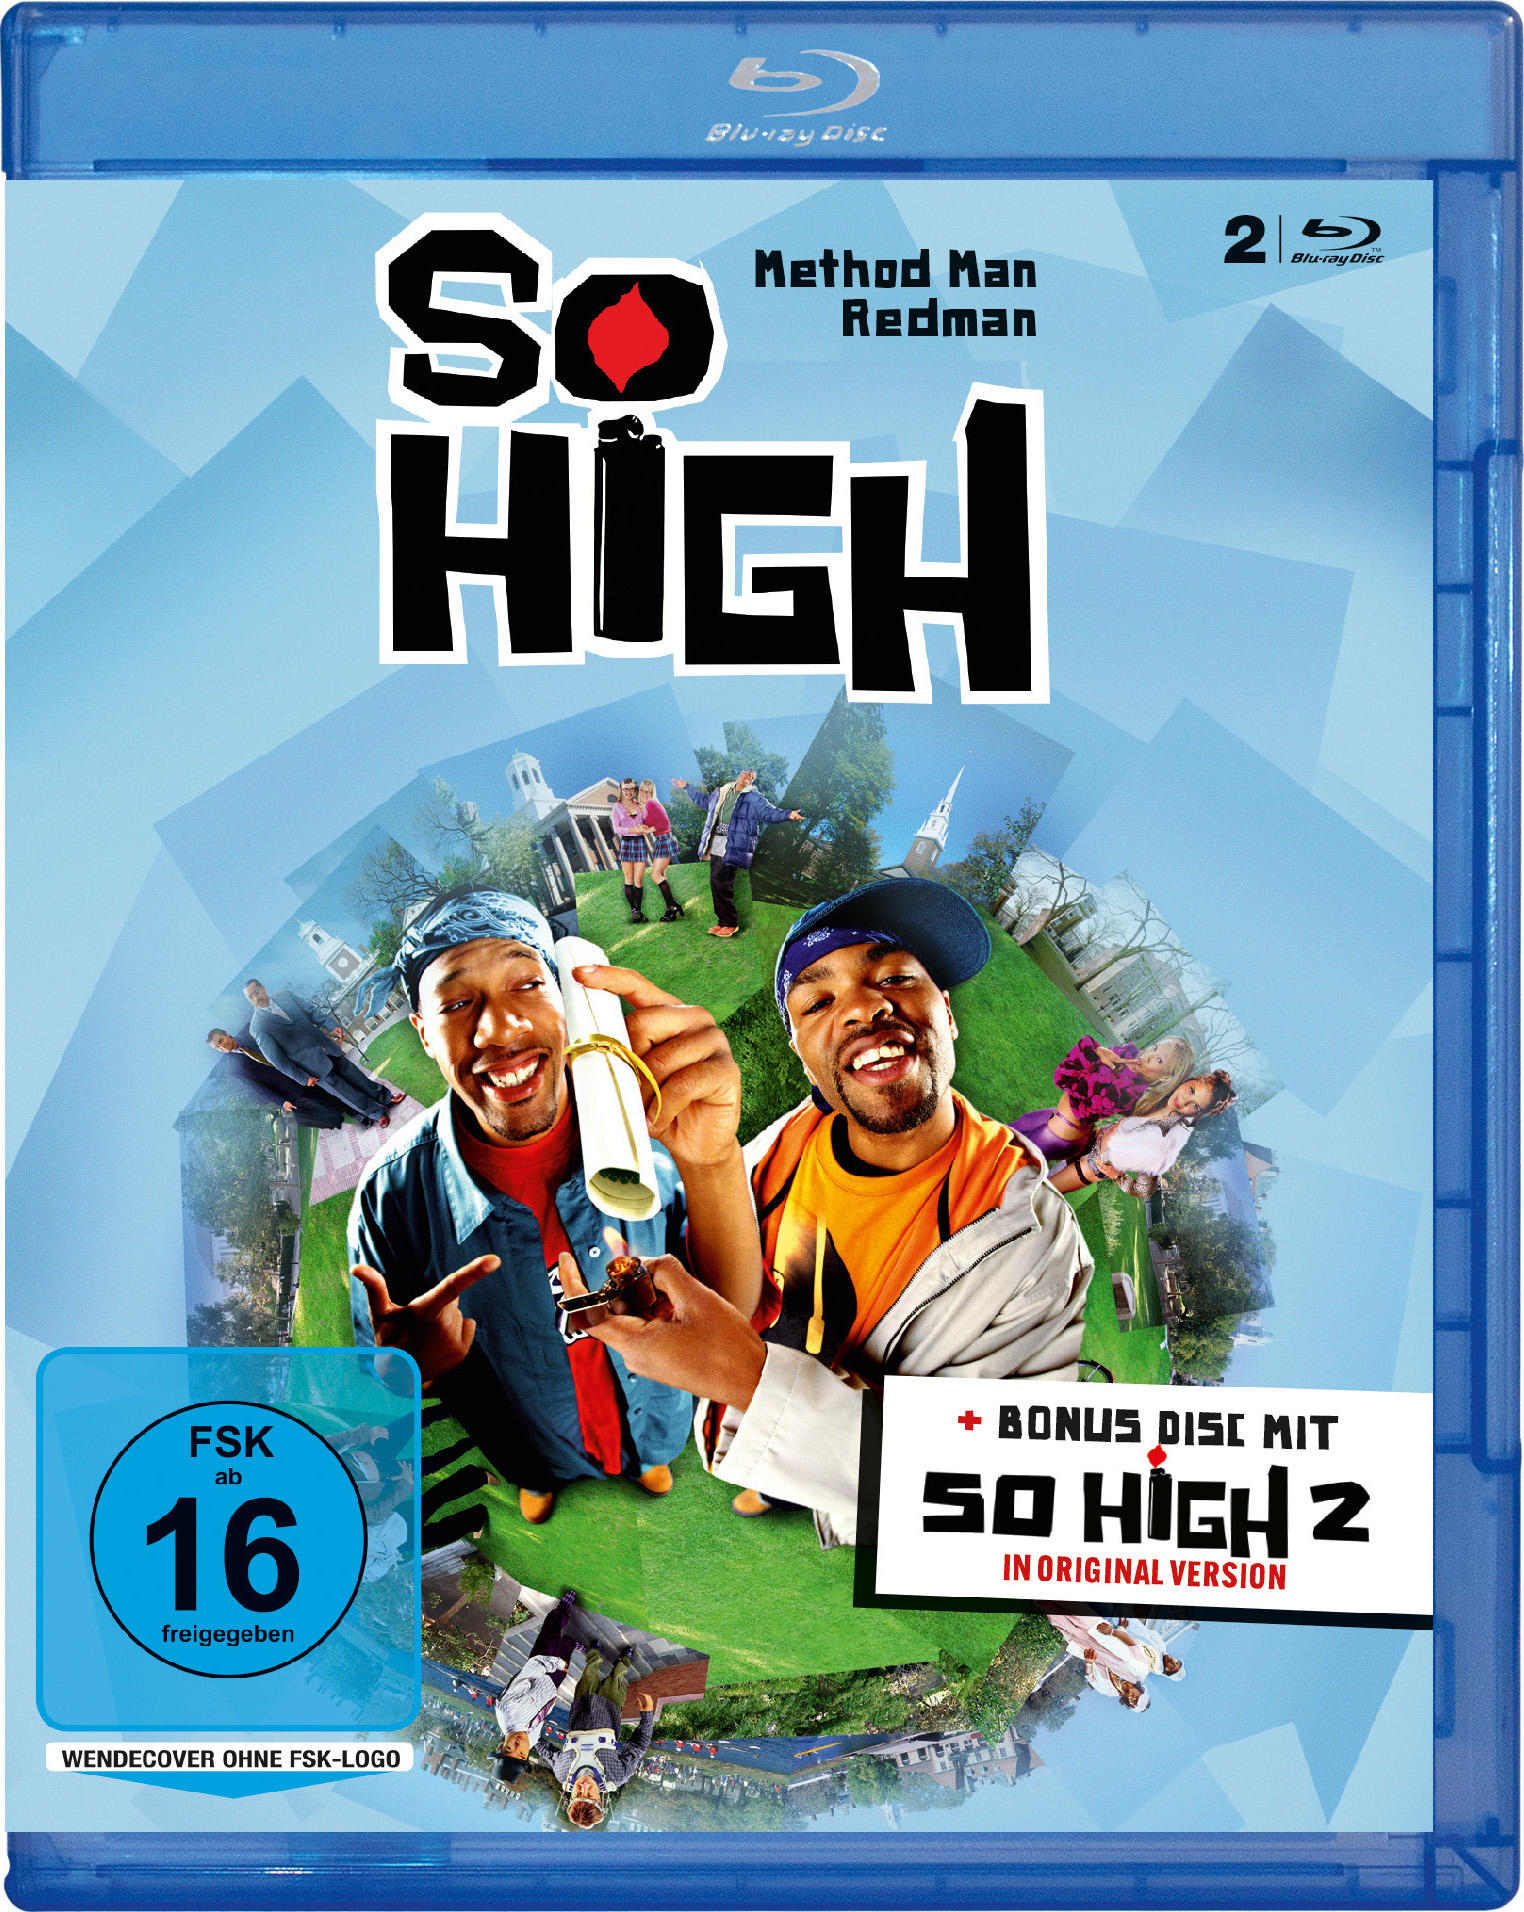 So Blu-ray High